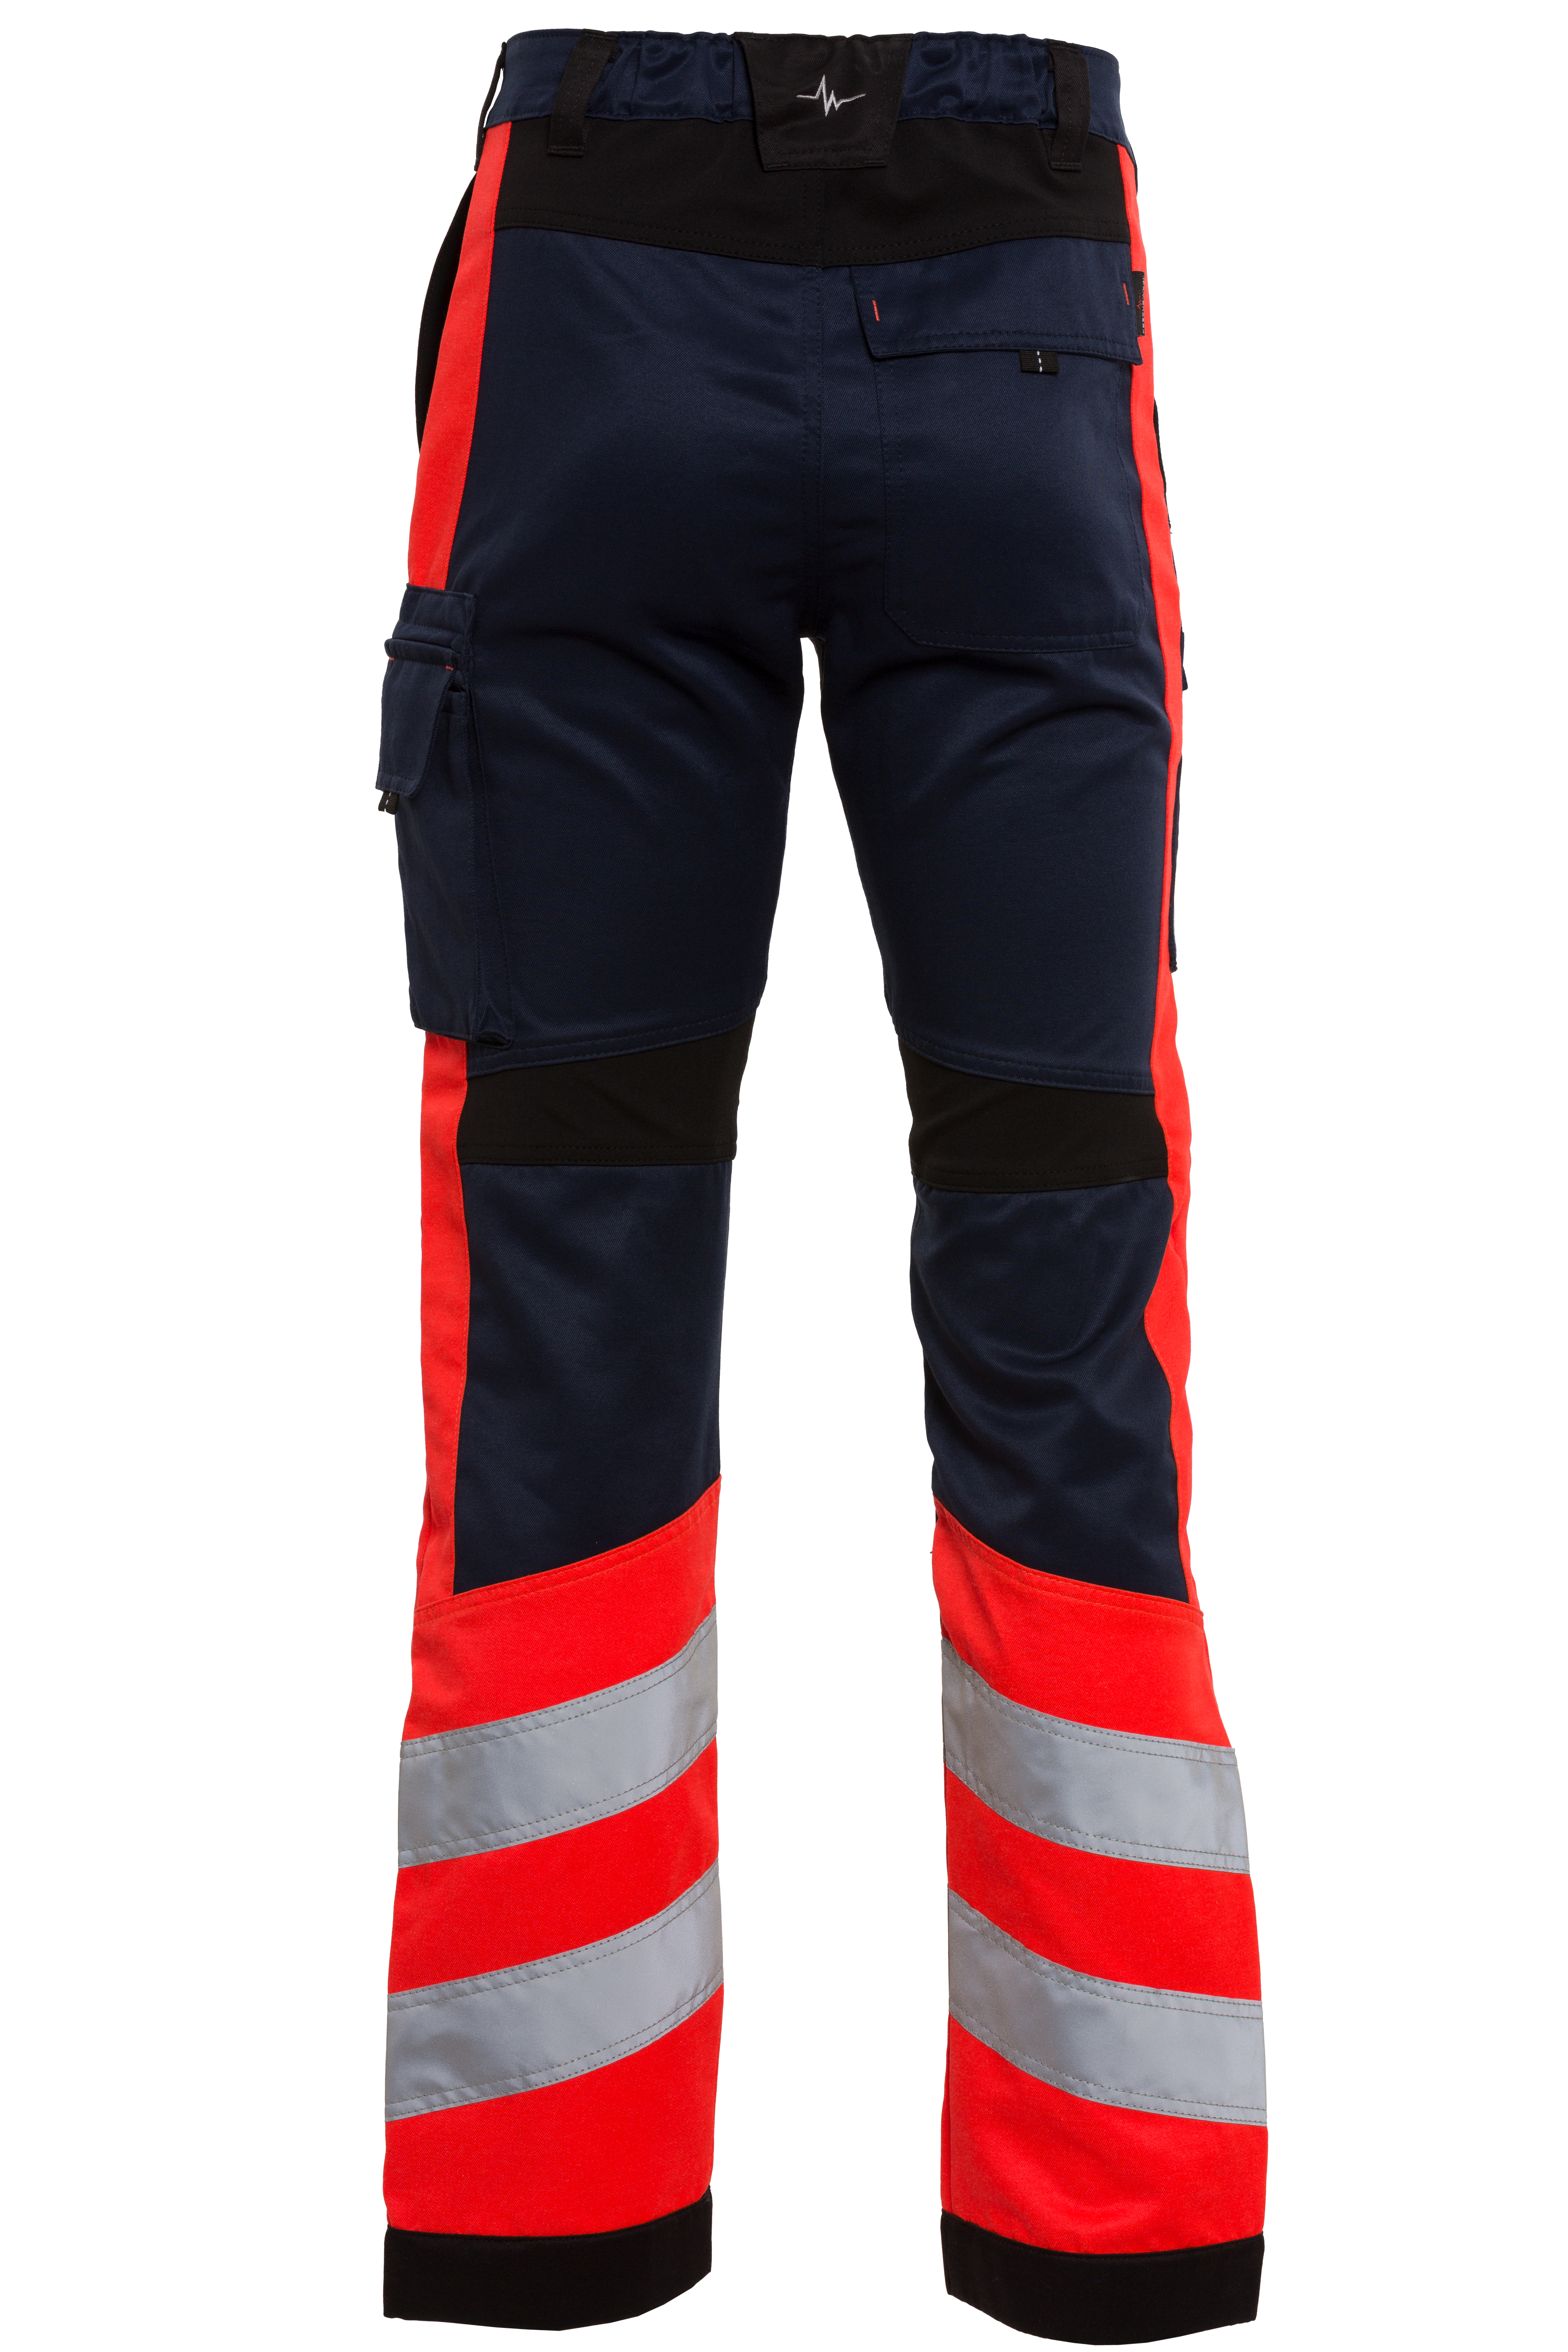 Rescuewear Unisex Hose Stretch HiVis Klasse 1 Marineblau / Schwarz / Neon Rot  - 48